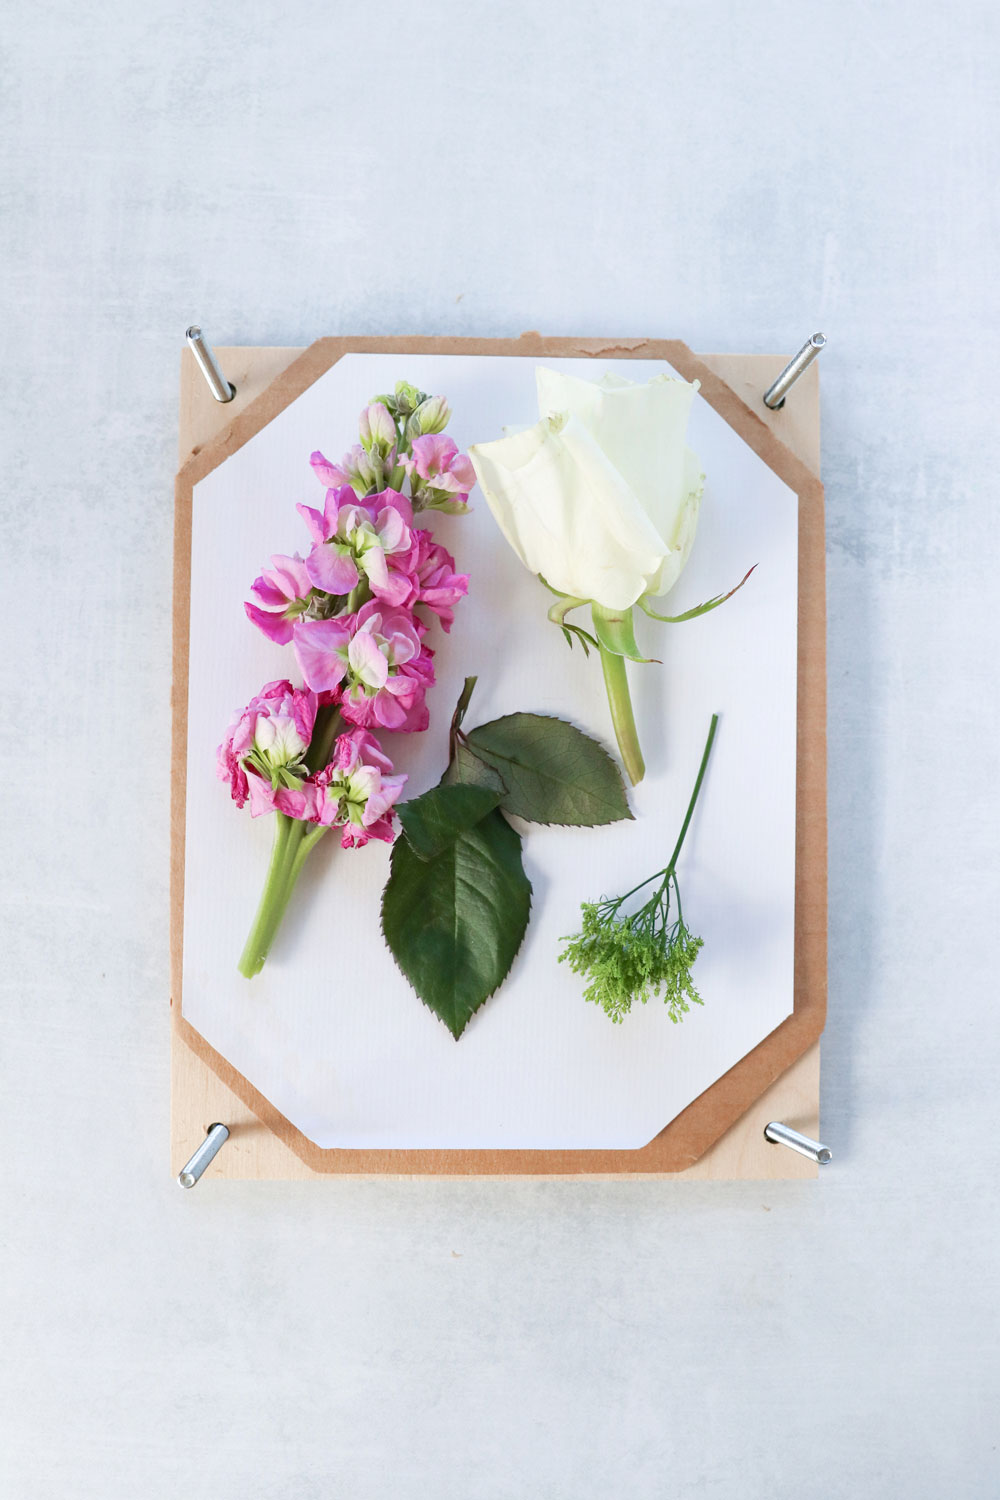 How To Press Flowers + Make a DIY Flower Press